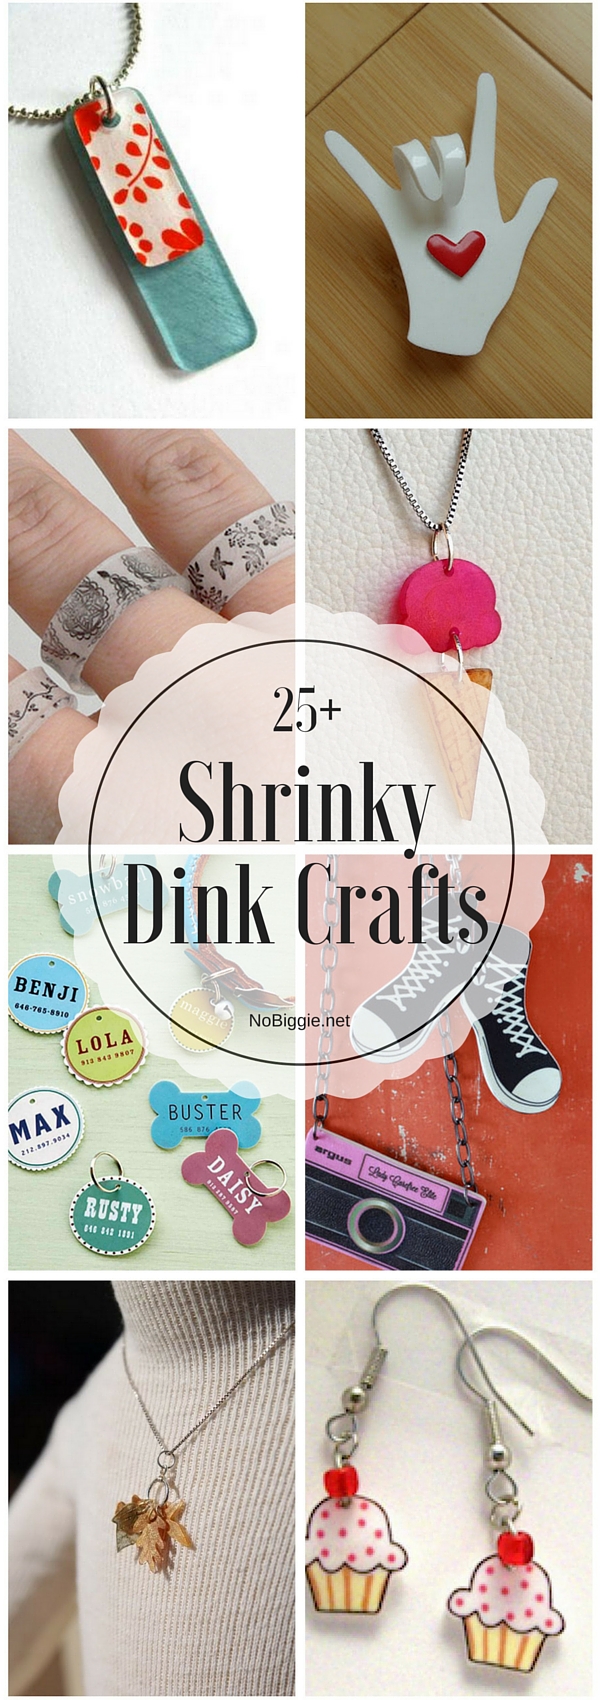 25+ Shrinky Dink Crafts | NoBiggie.net